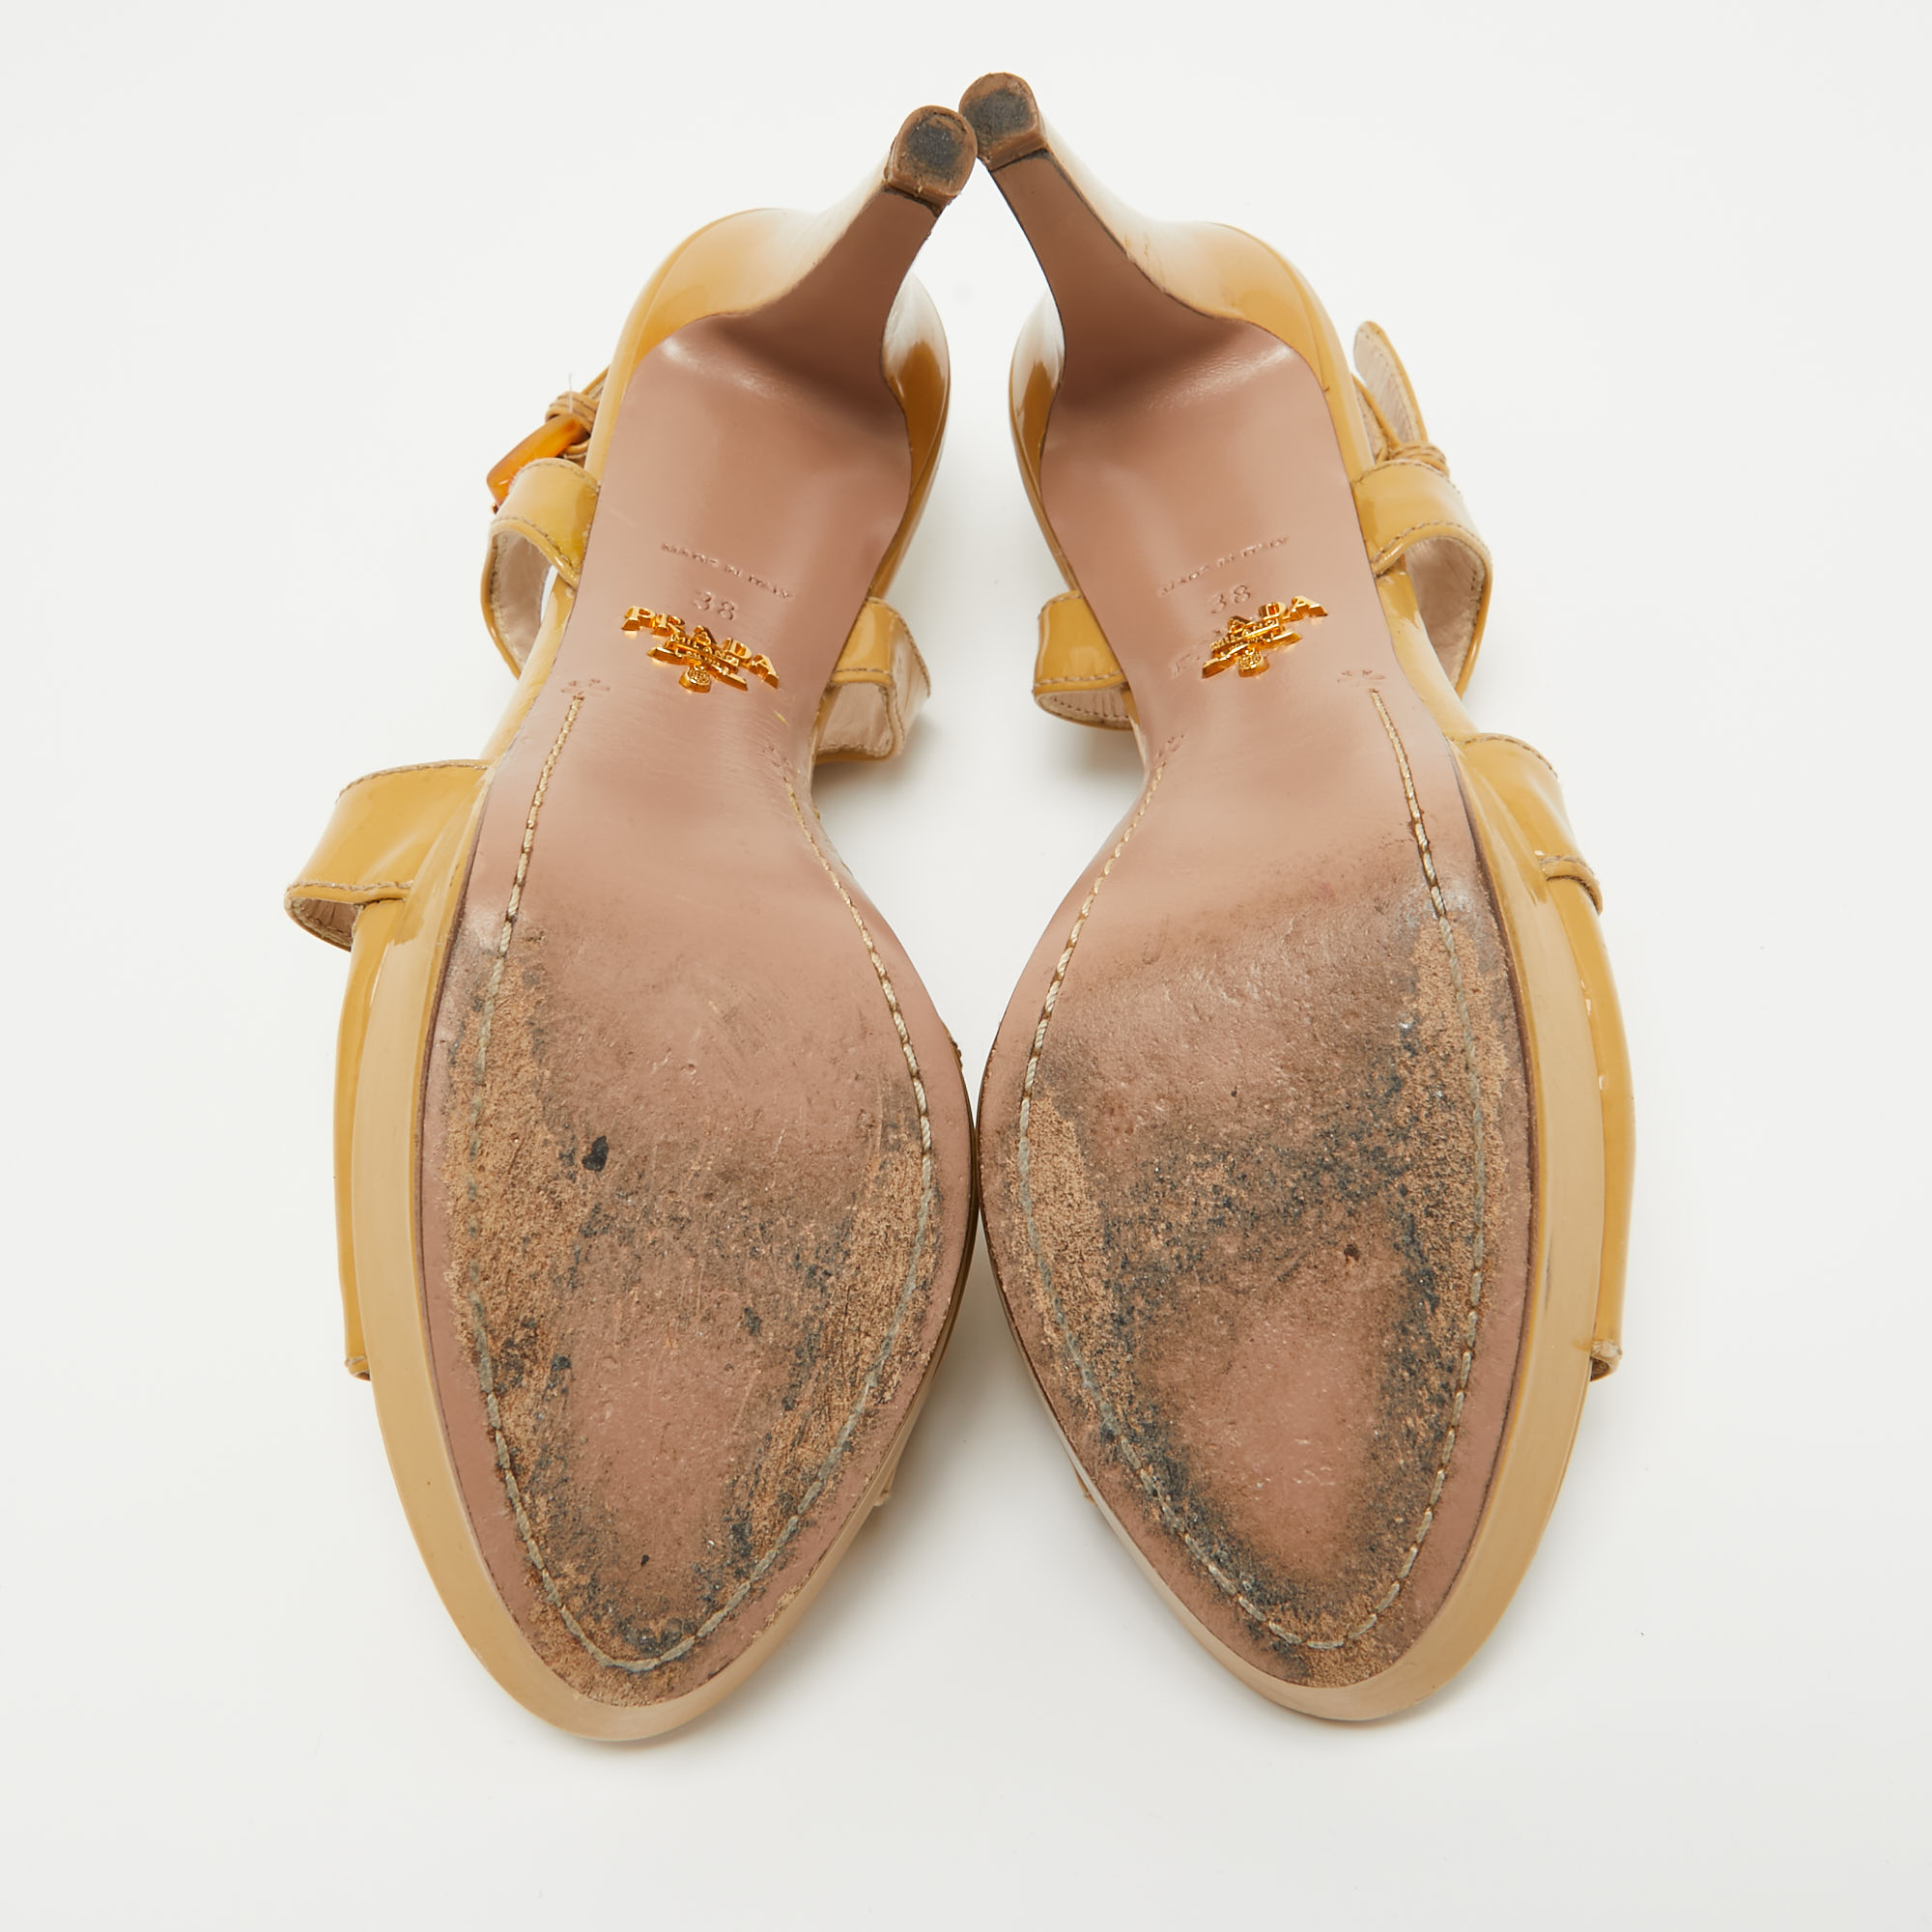 Prada Beige Patent Leather Platform Ankle Strap Sandals Size 38